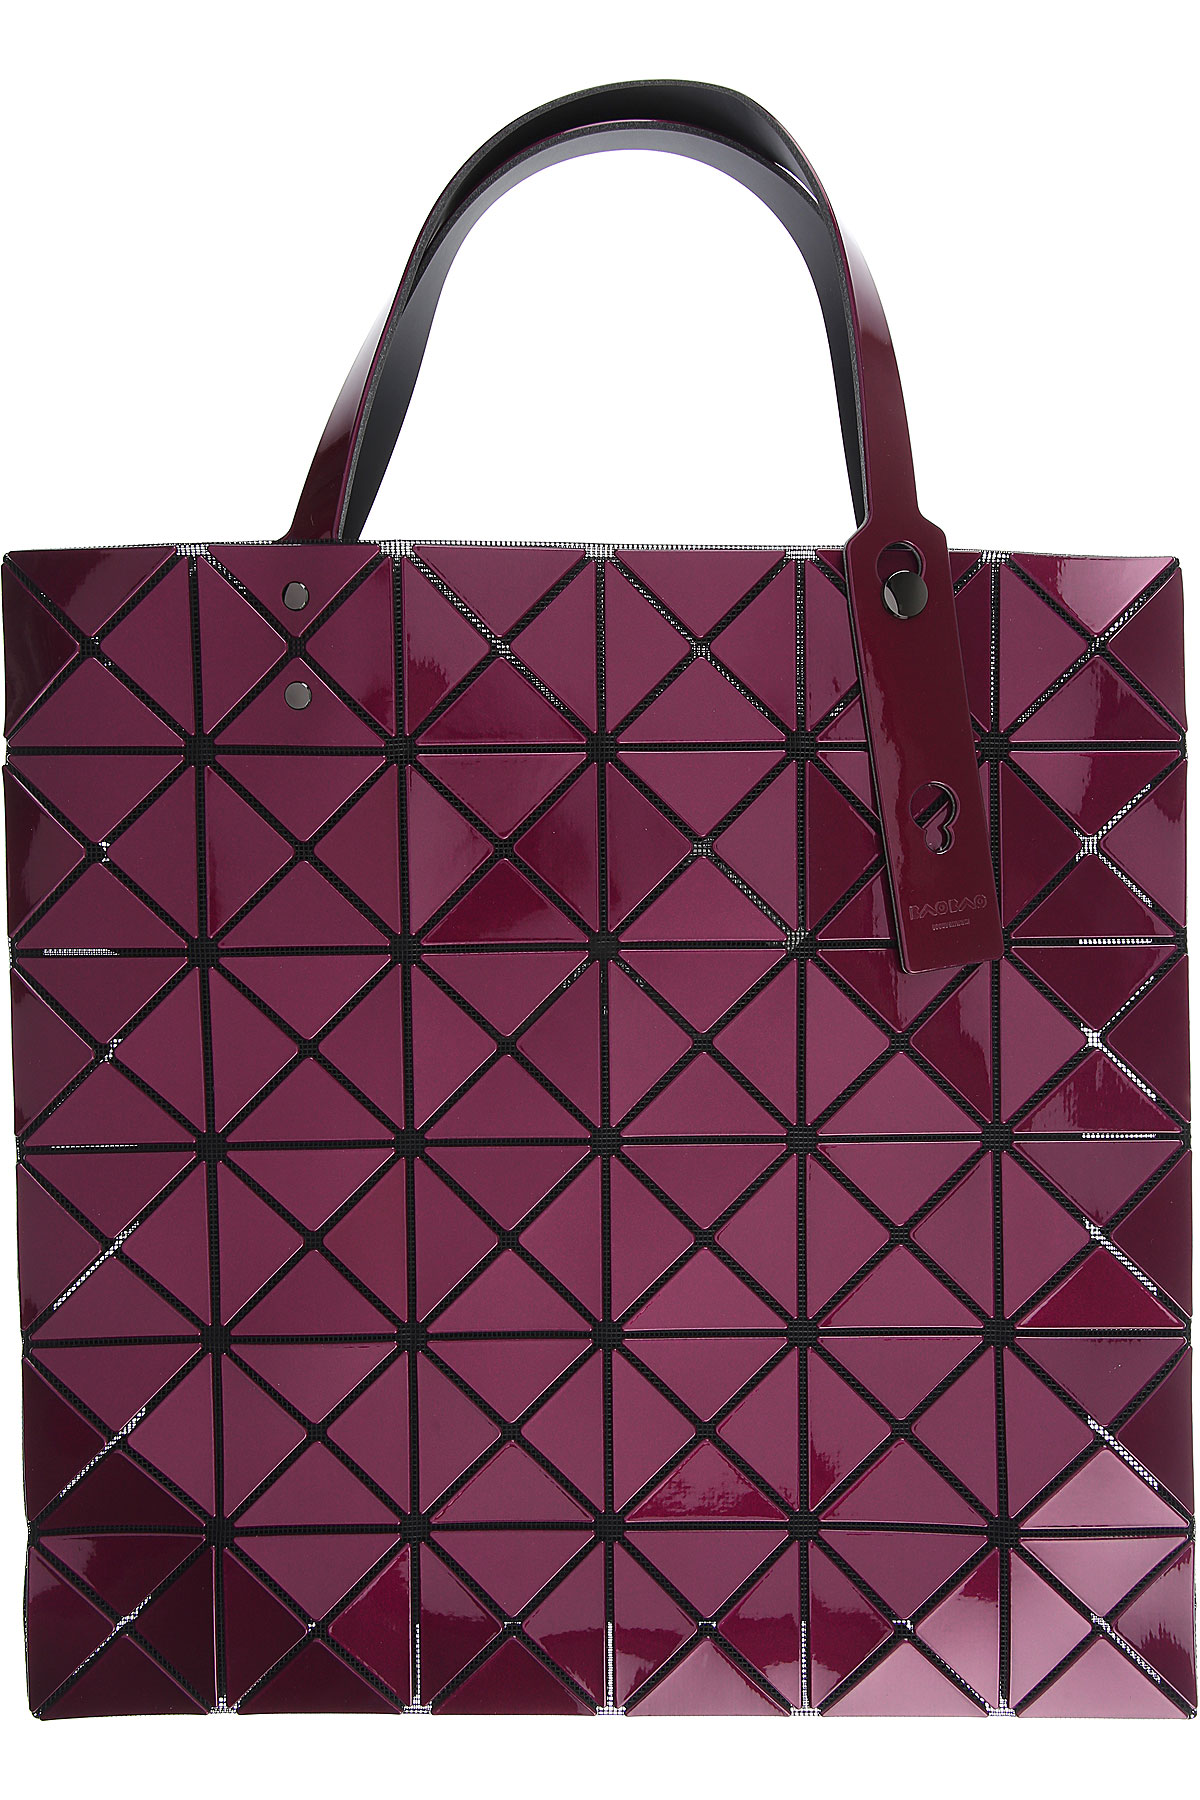 Handbags Issey Miyake, Style code: bb88-ag623-84